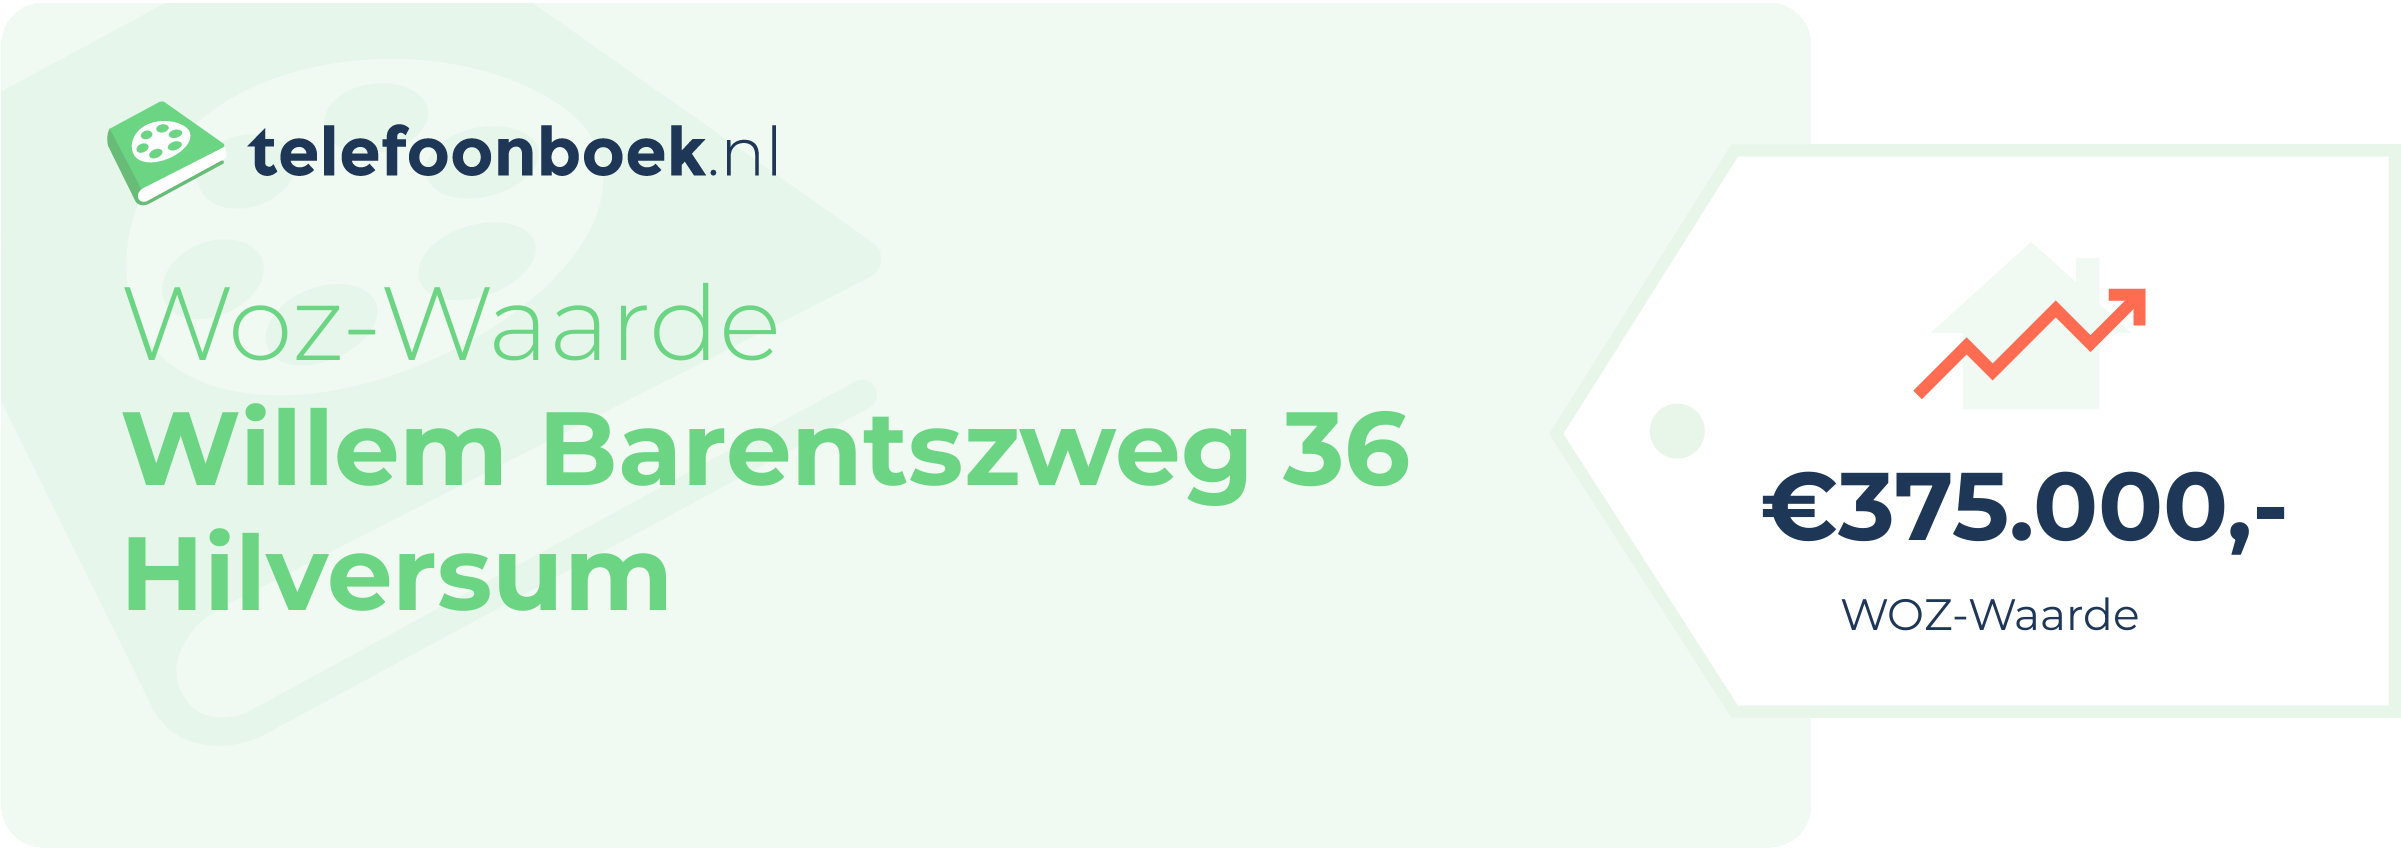 WOZ-waarde Willem Barentszweg 36 Hilversum